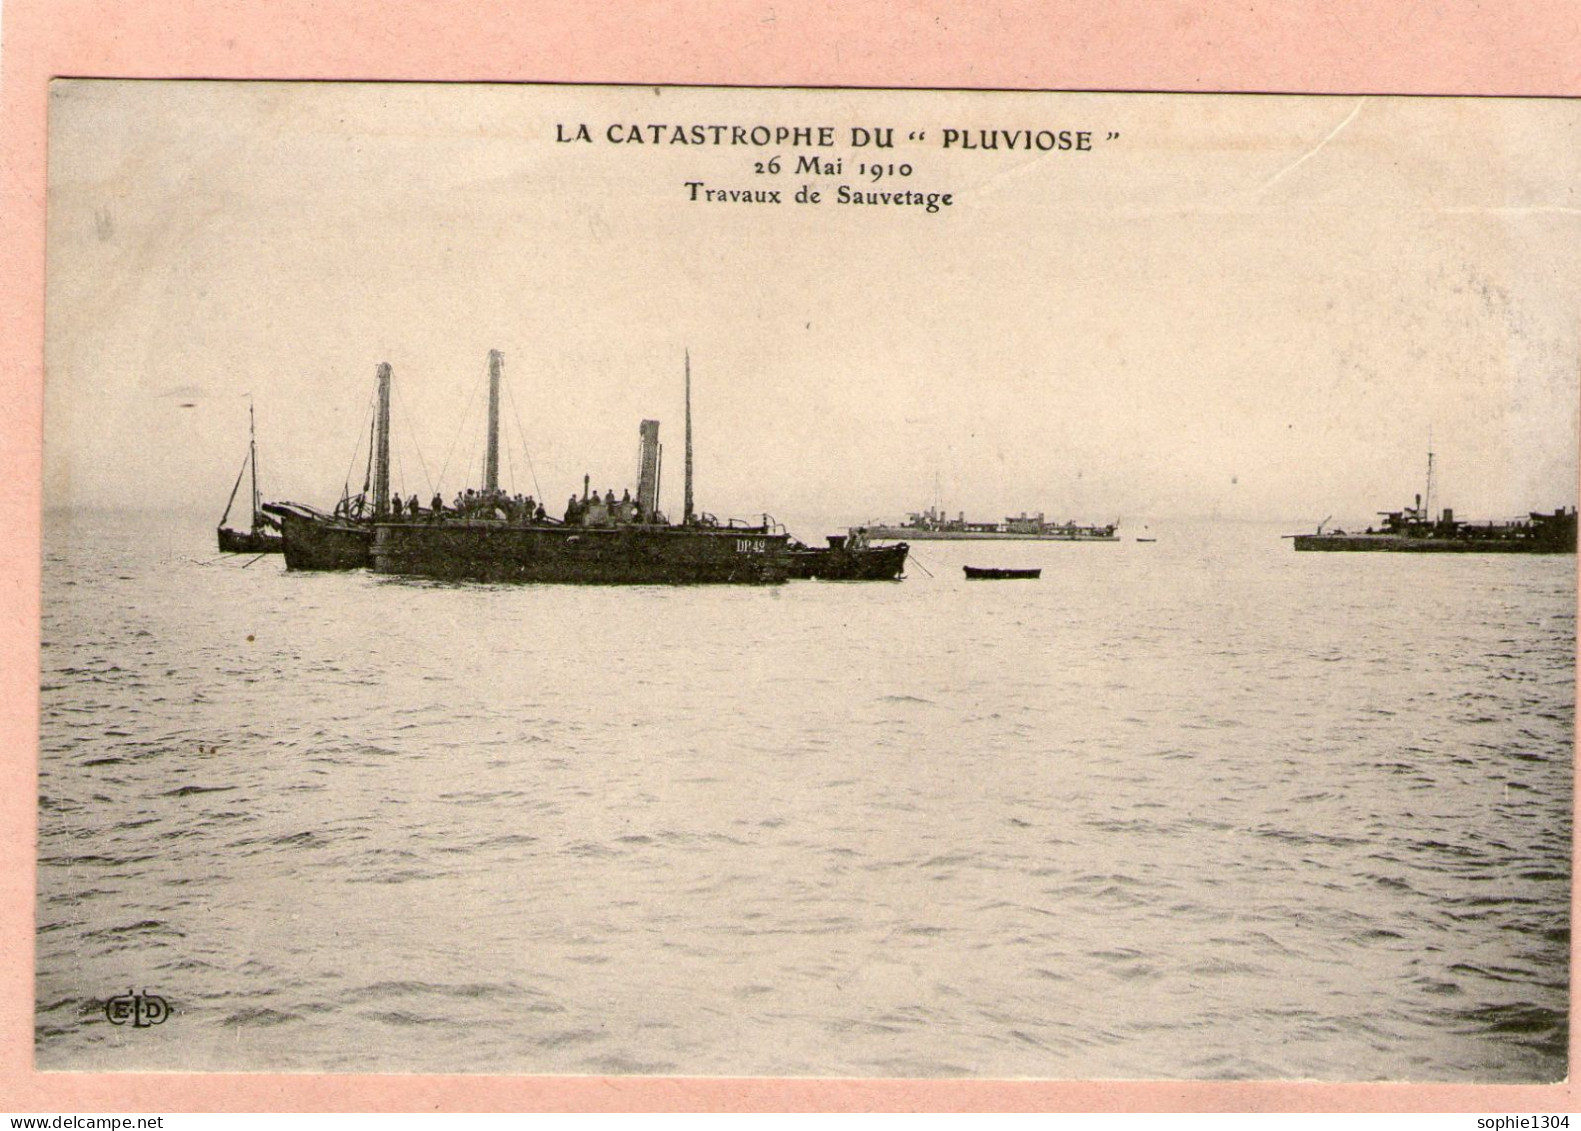 LA CATASTROPHE DU "PLUVIOSE" - 26 MAI 1910 - Travaux De Sauvetage - - Submarines